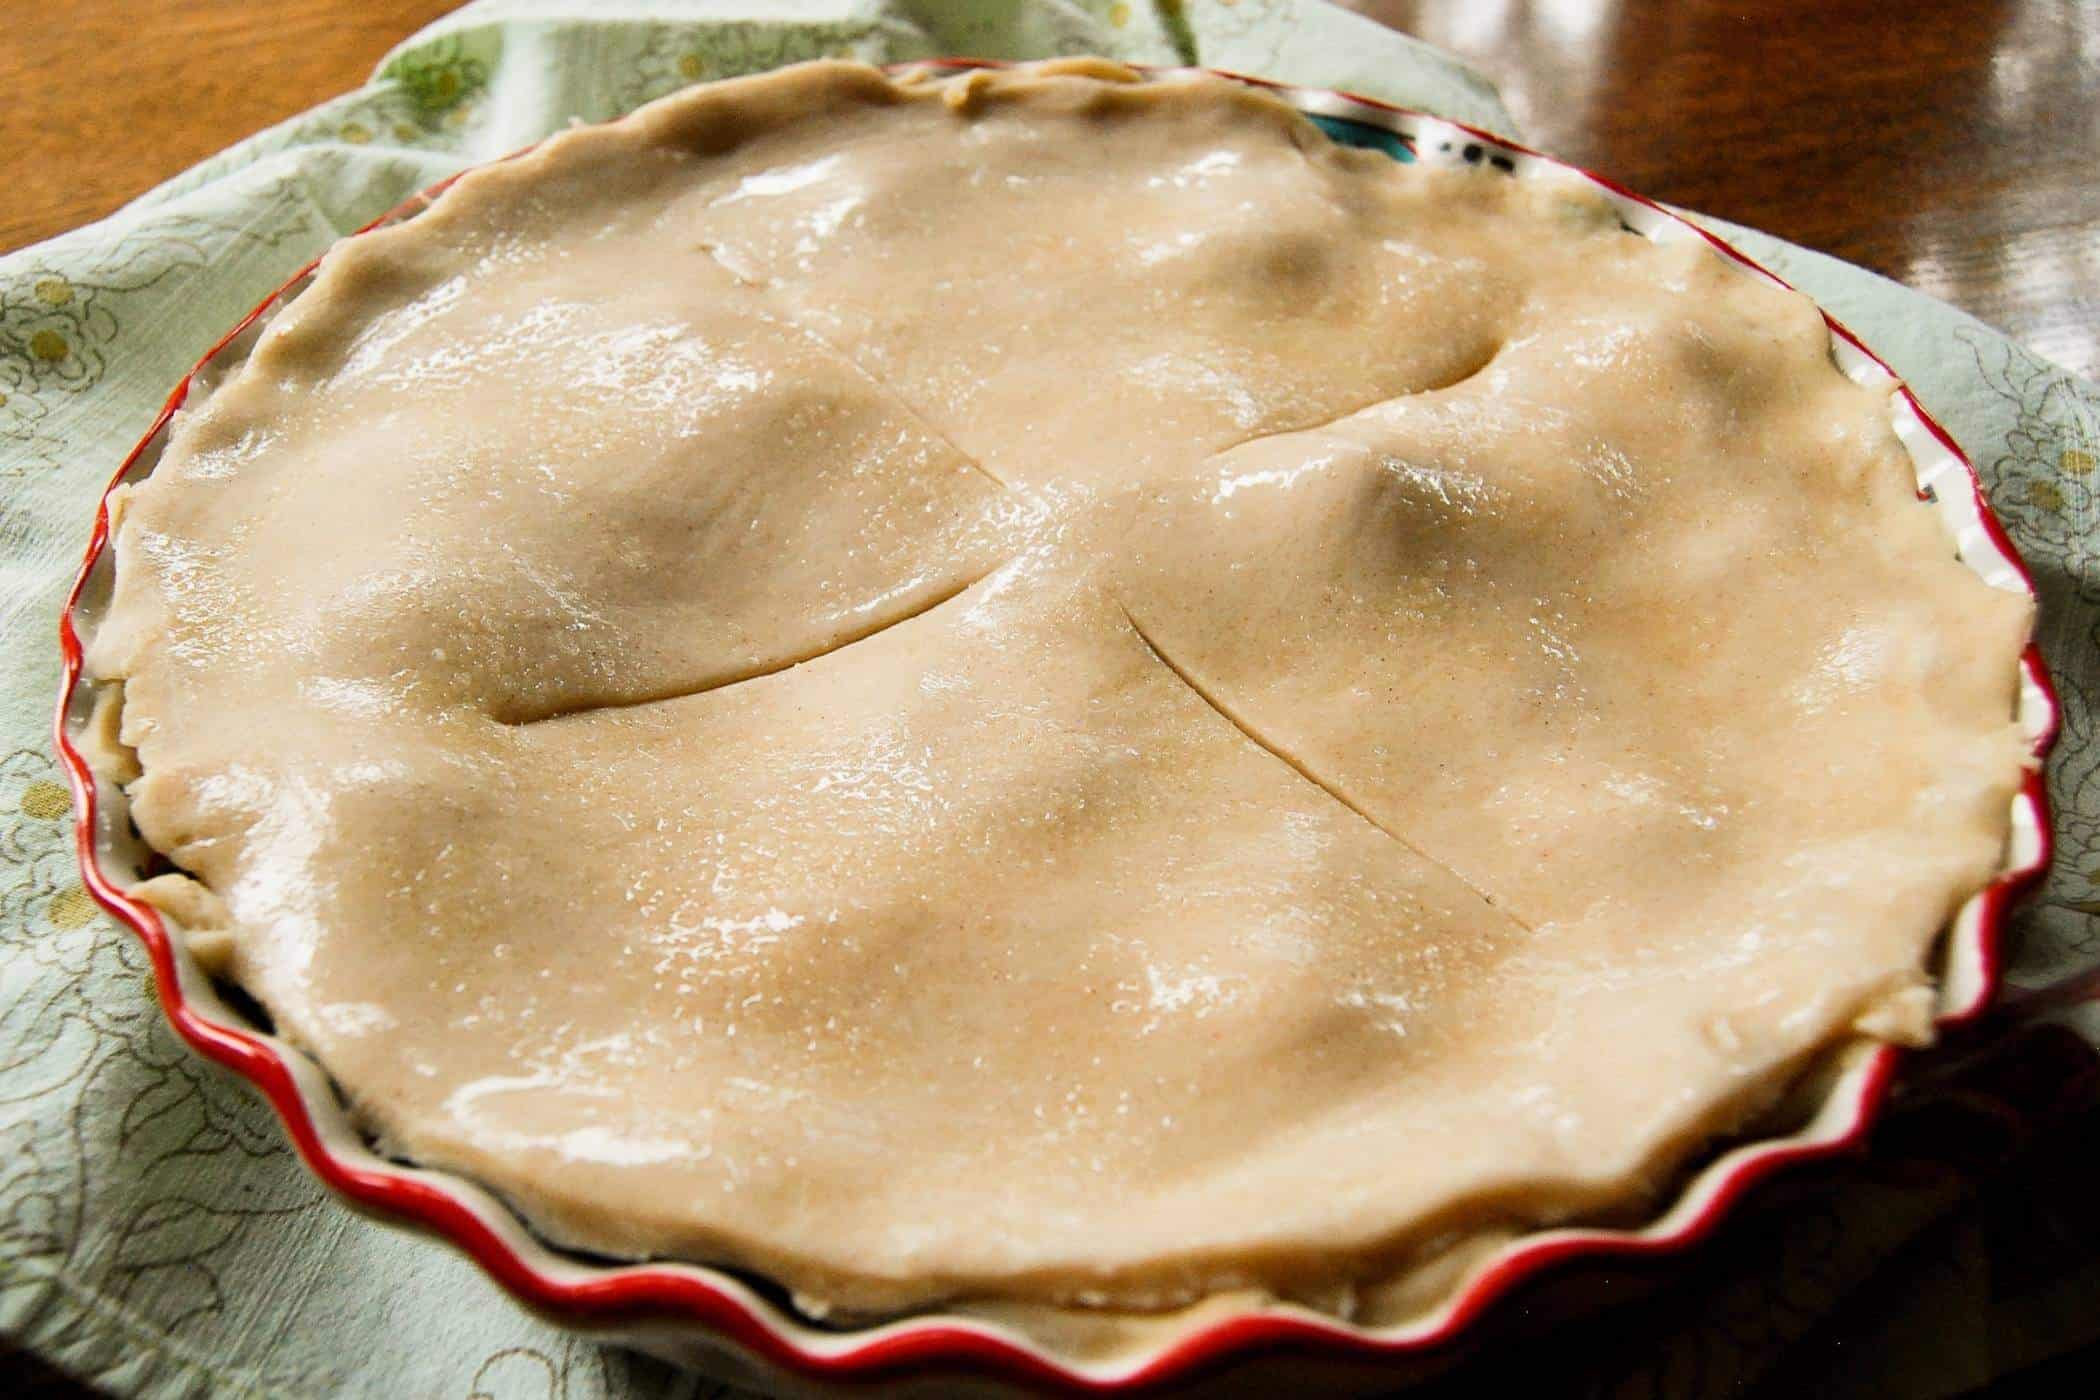 assembled peach pie pre baked.